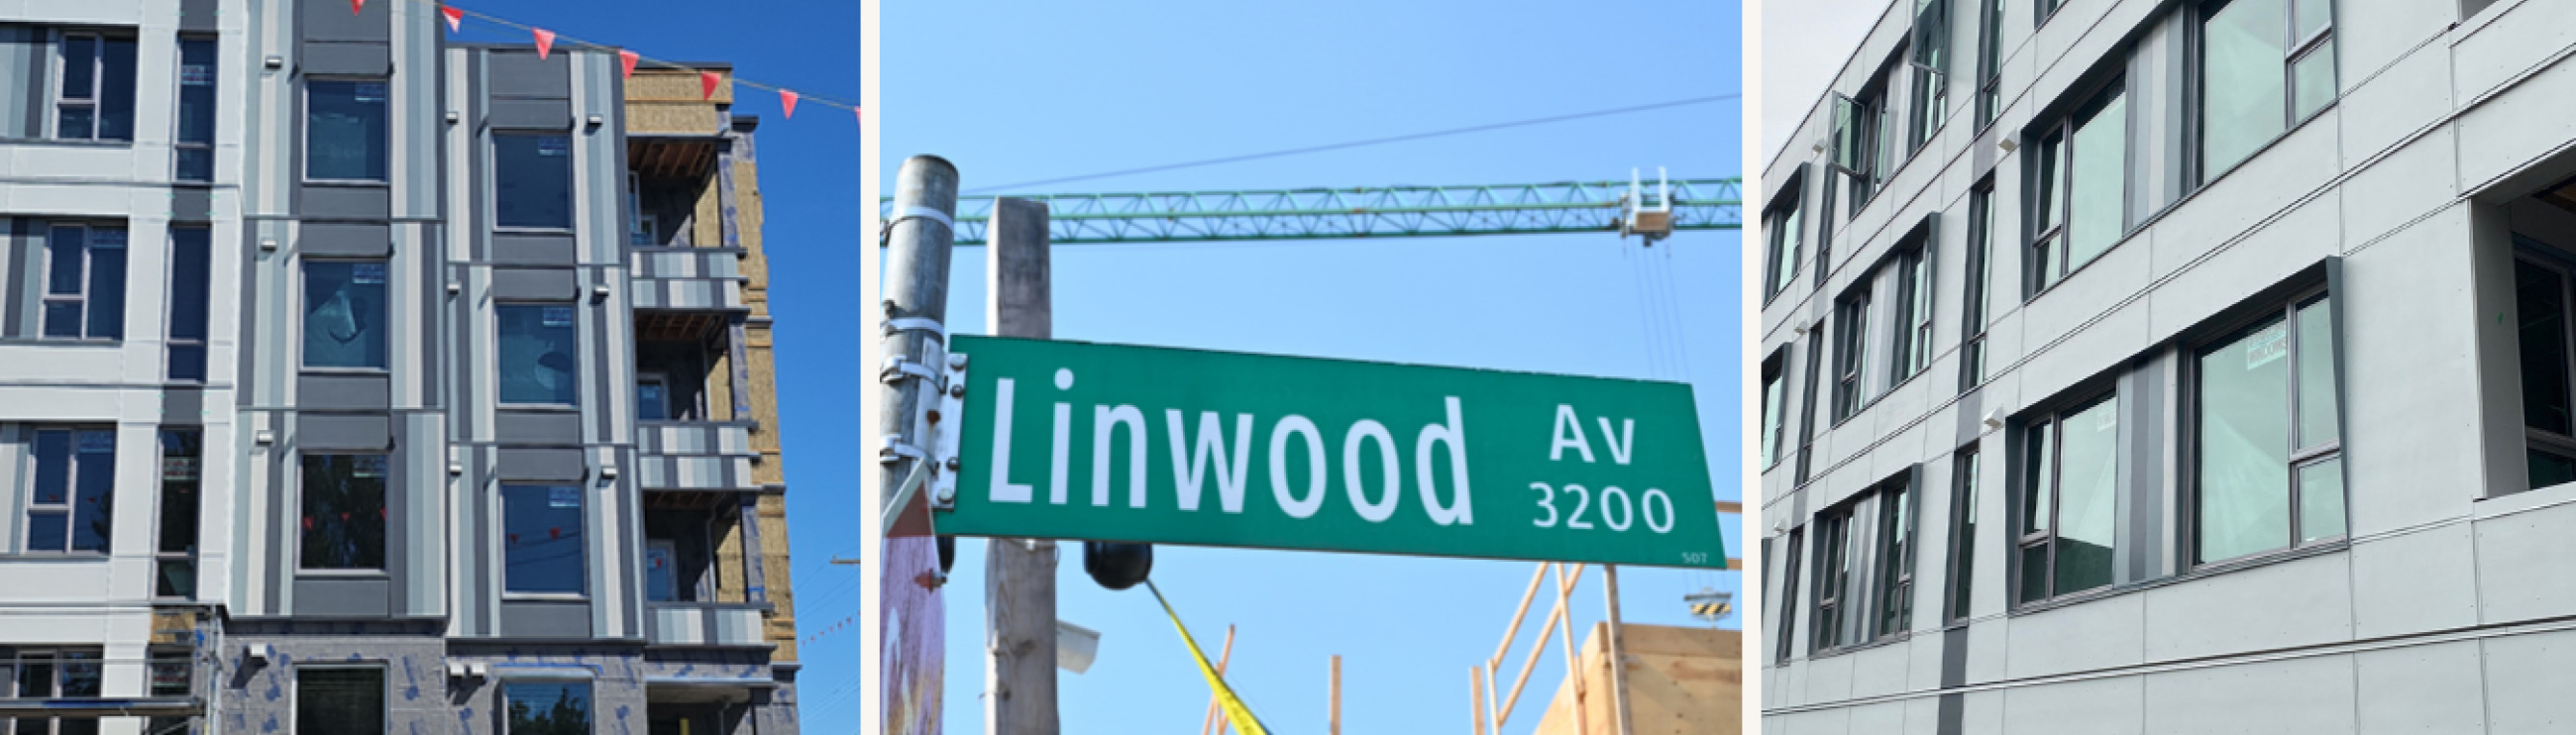 Linwood banner2